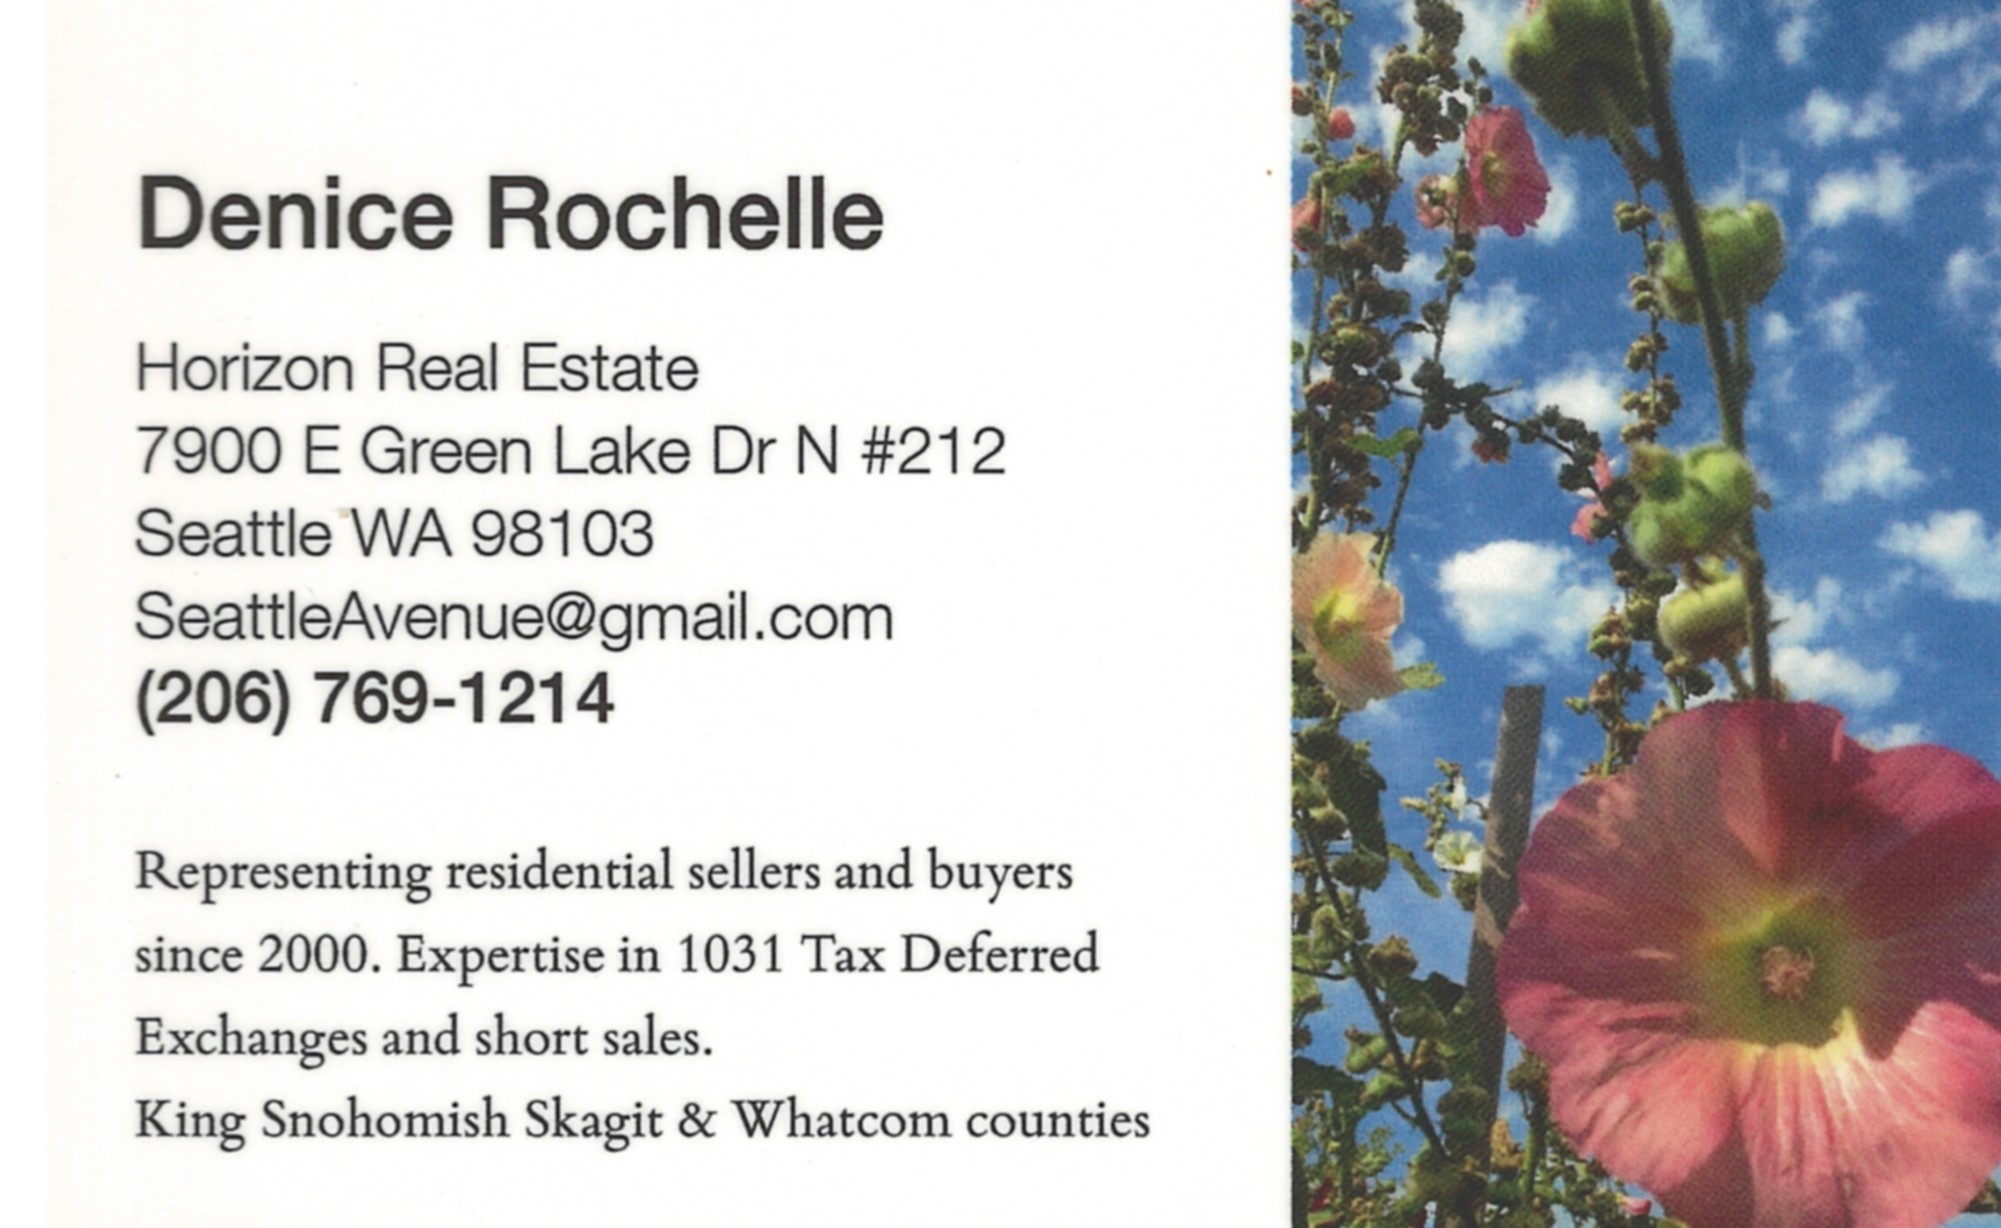 Denice Rochelle business card